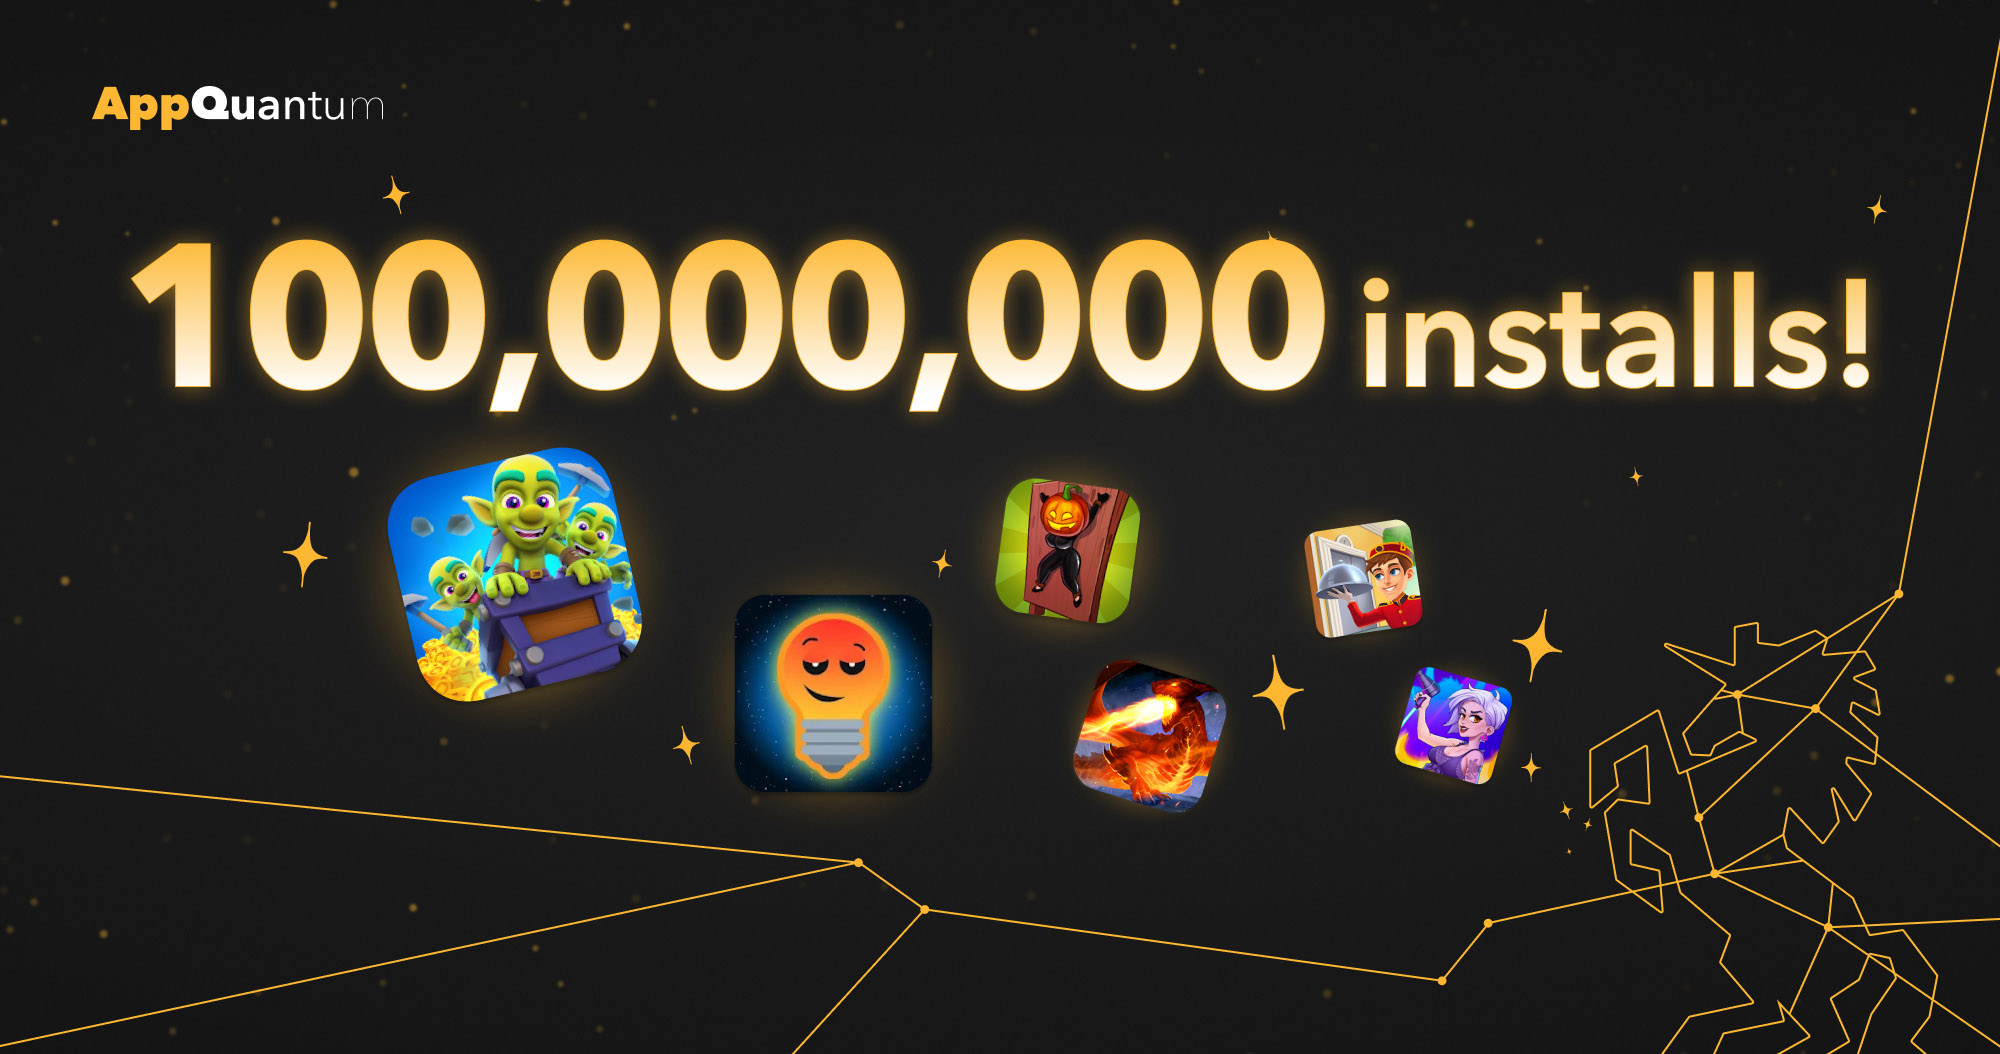 AppQuantum's Games Hit 100,000,000 Downloads!